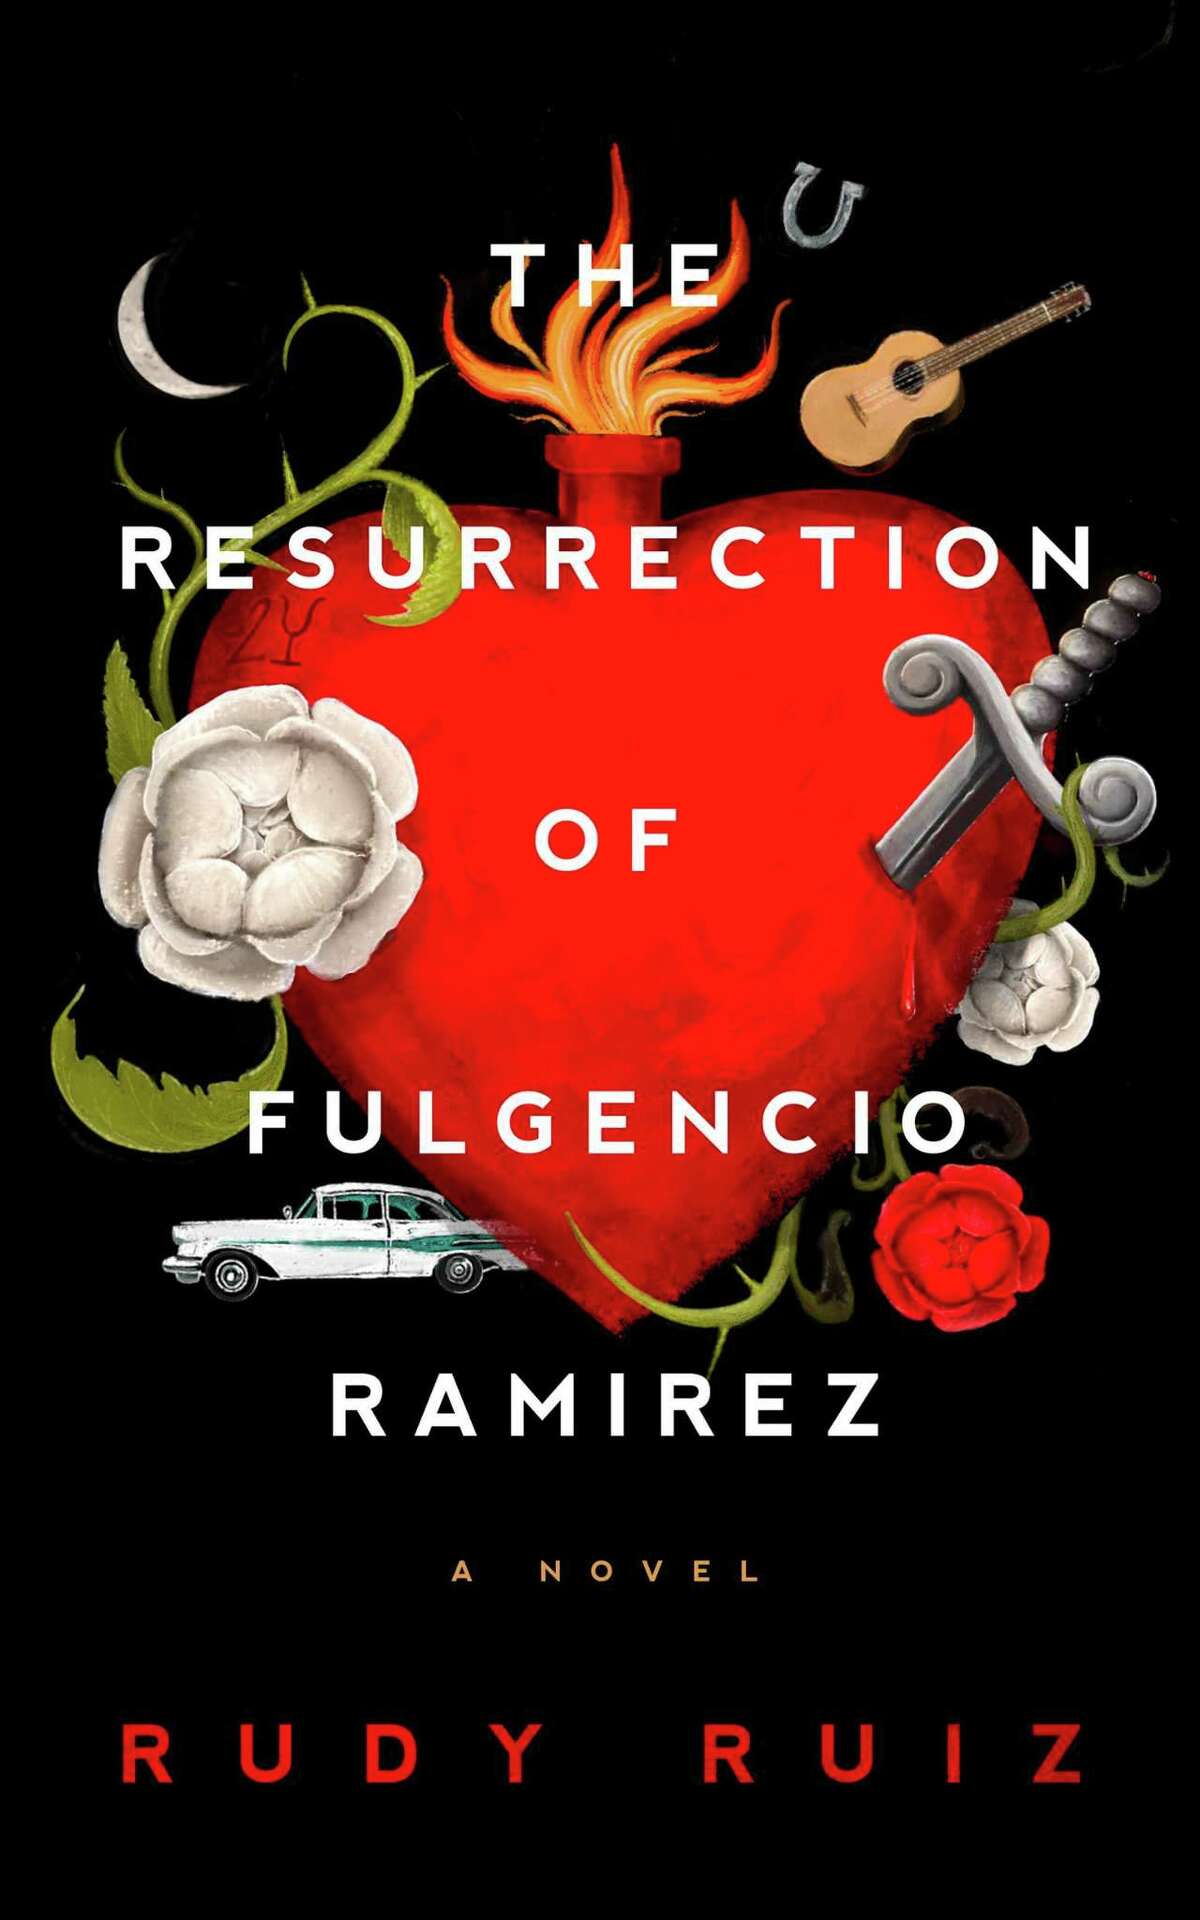 “The Resurrection of Fulgencio Ramirez” by Rudy Ruiz